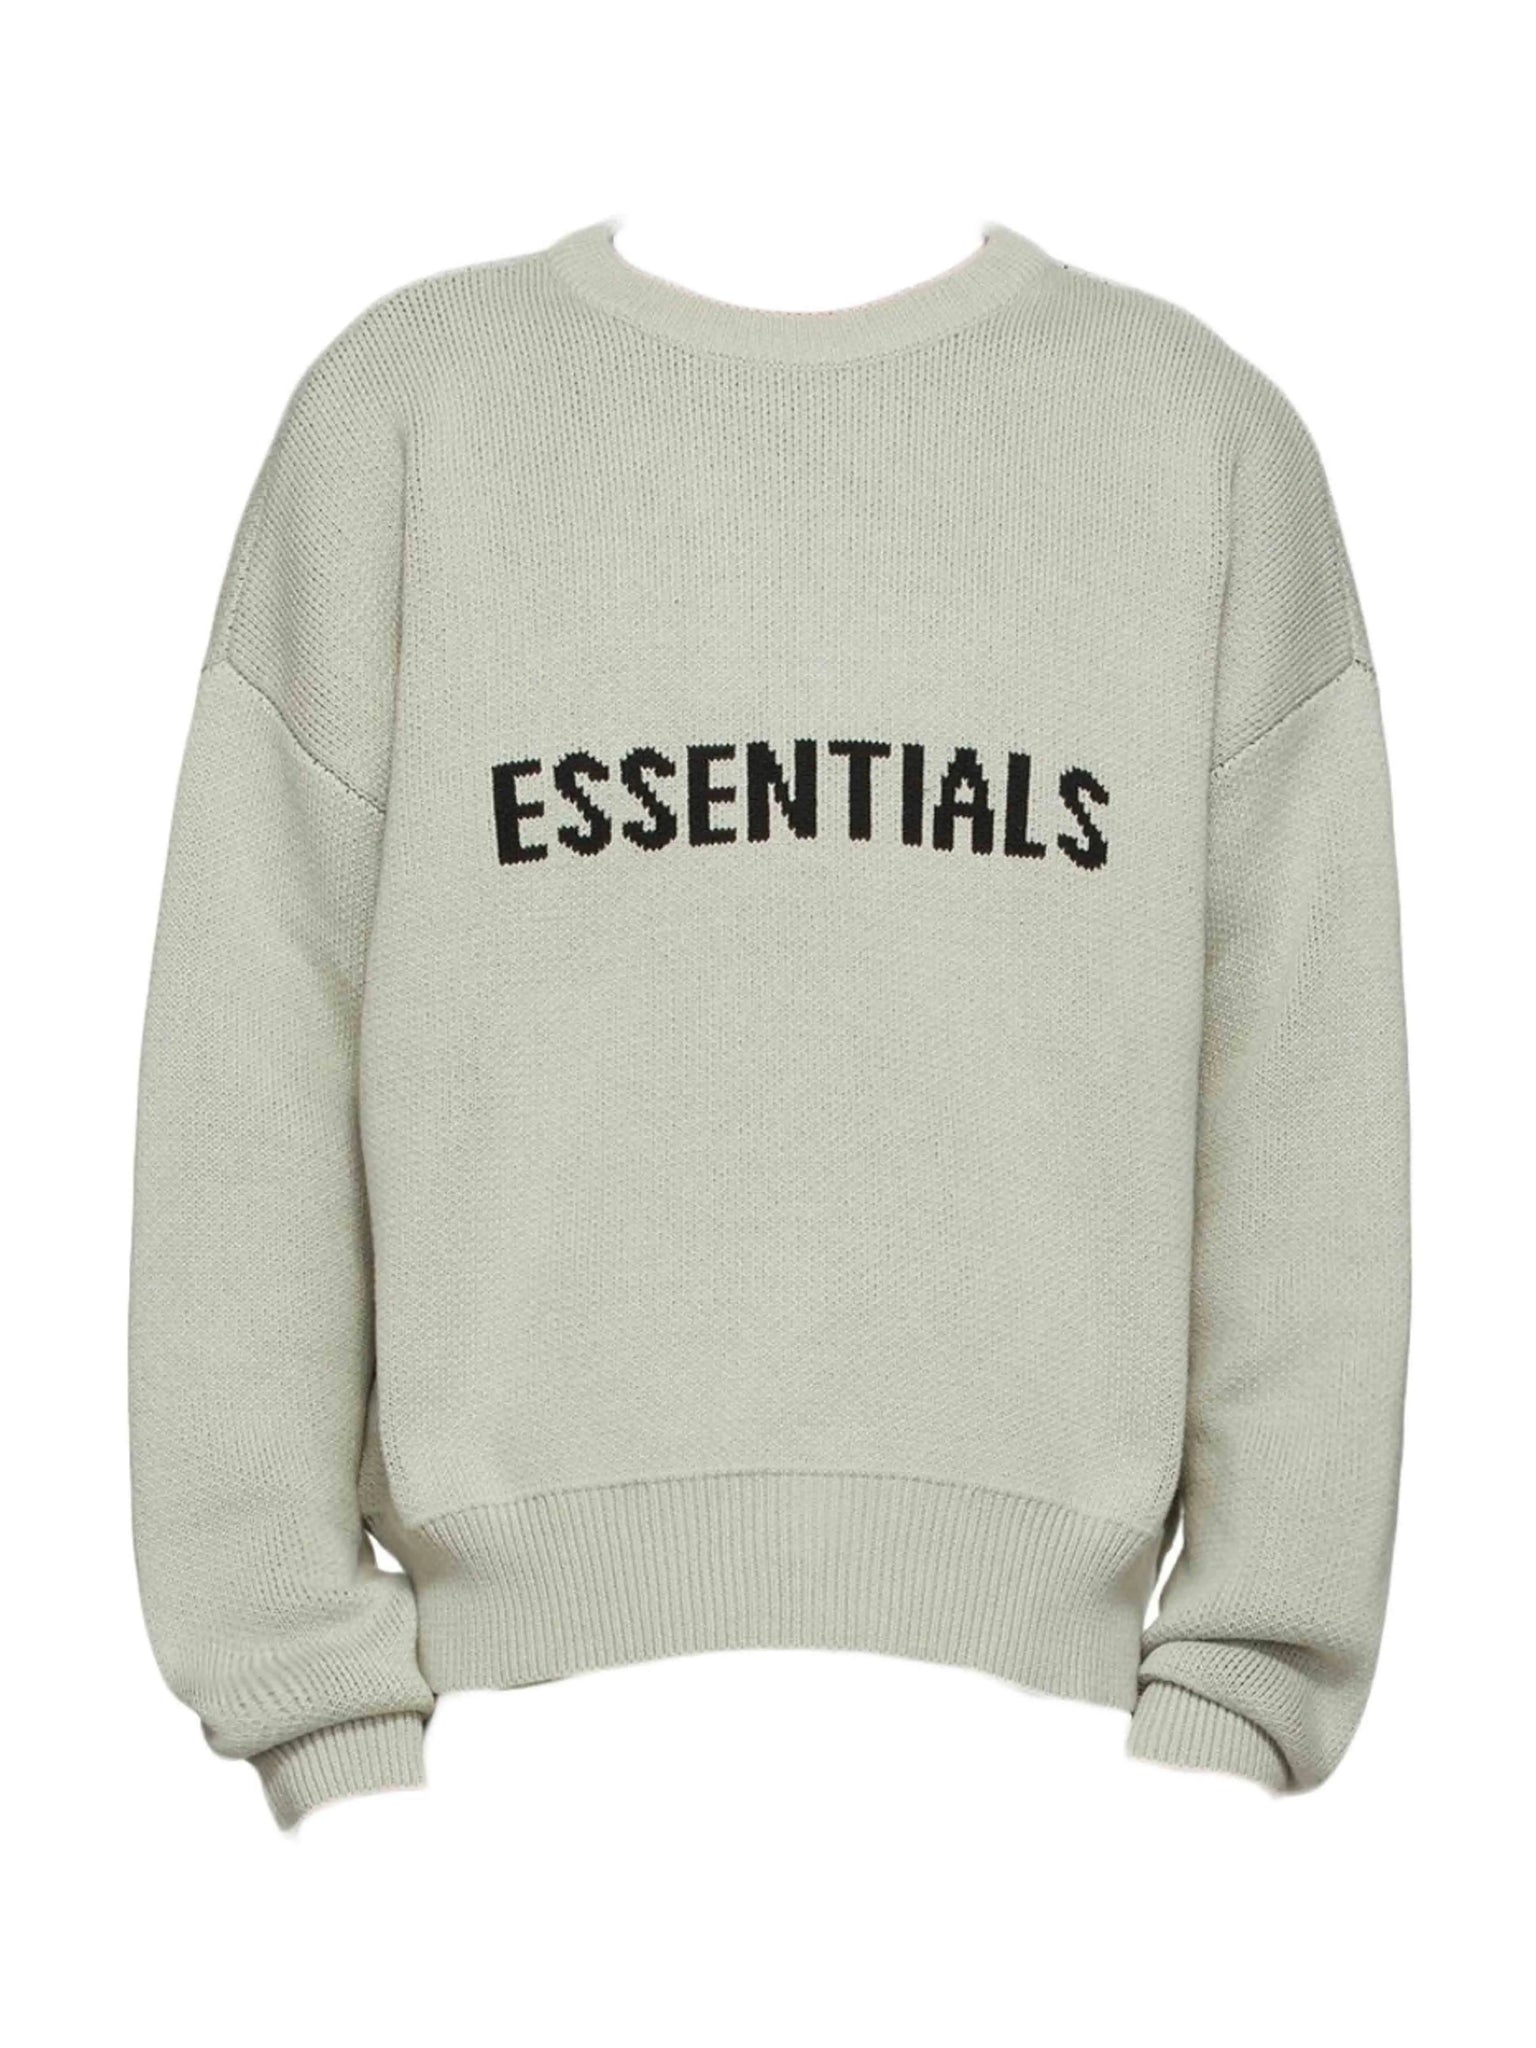 Fear of God Essentials X SSENSE Exclusive Pullover Sweater Concrete [FW21] Prior